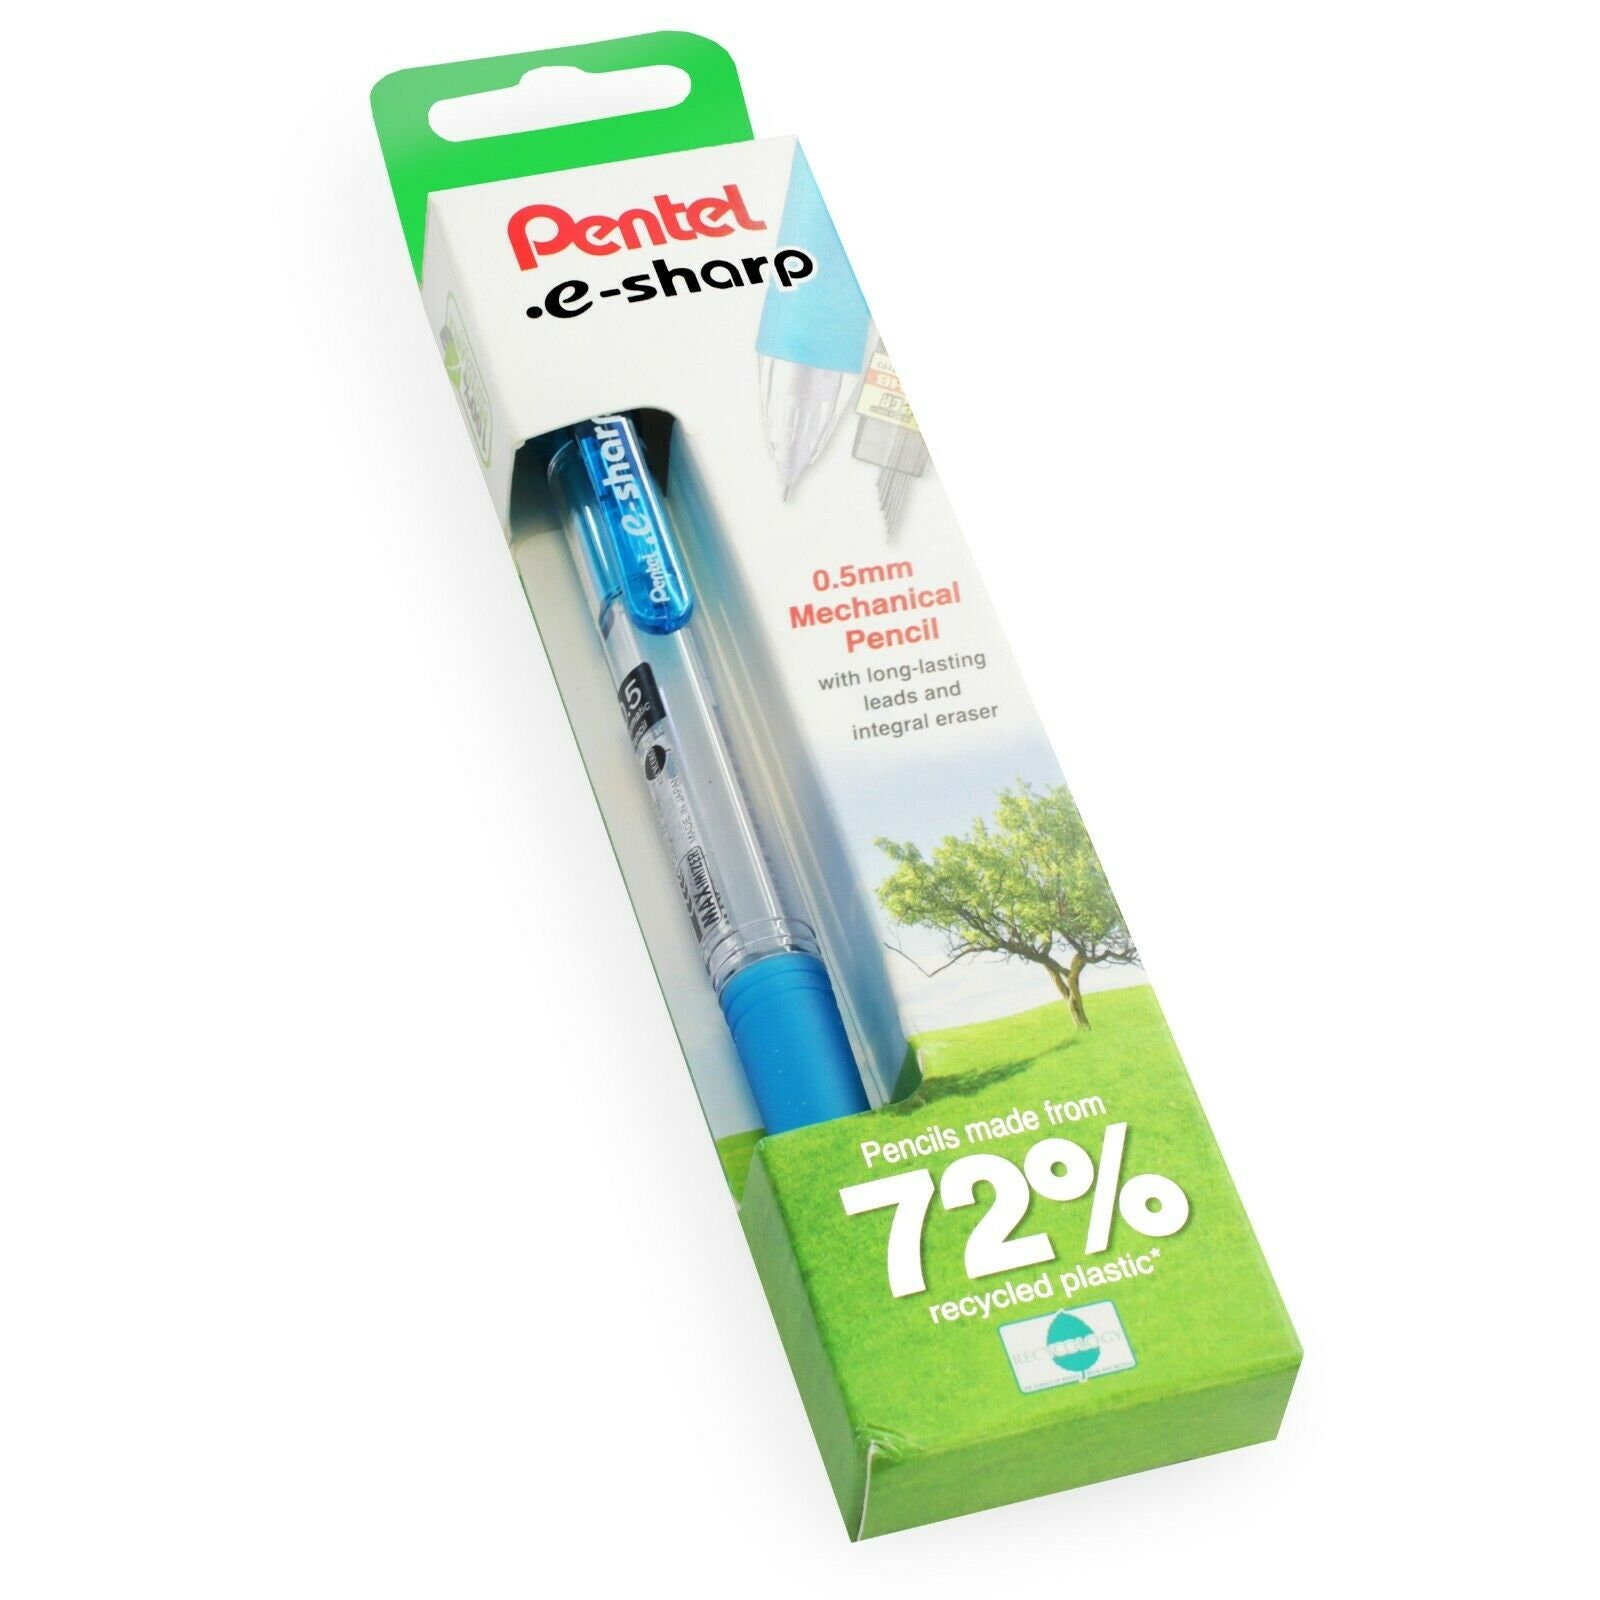 Verbinding dood dagboek Pentel E-sharp Mechanical Pencil 0.5mm 72% Recycled Plastic - Etsy Sweden